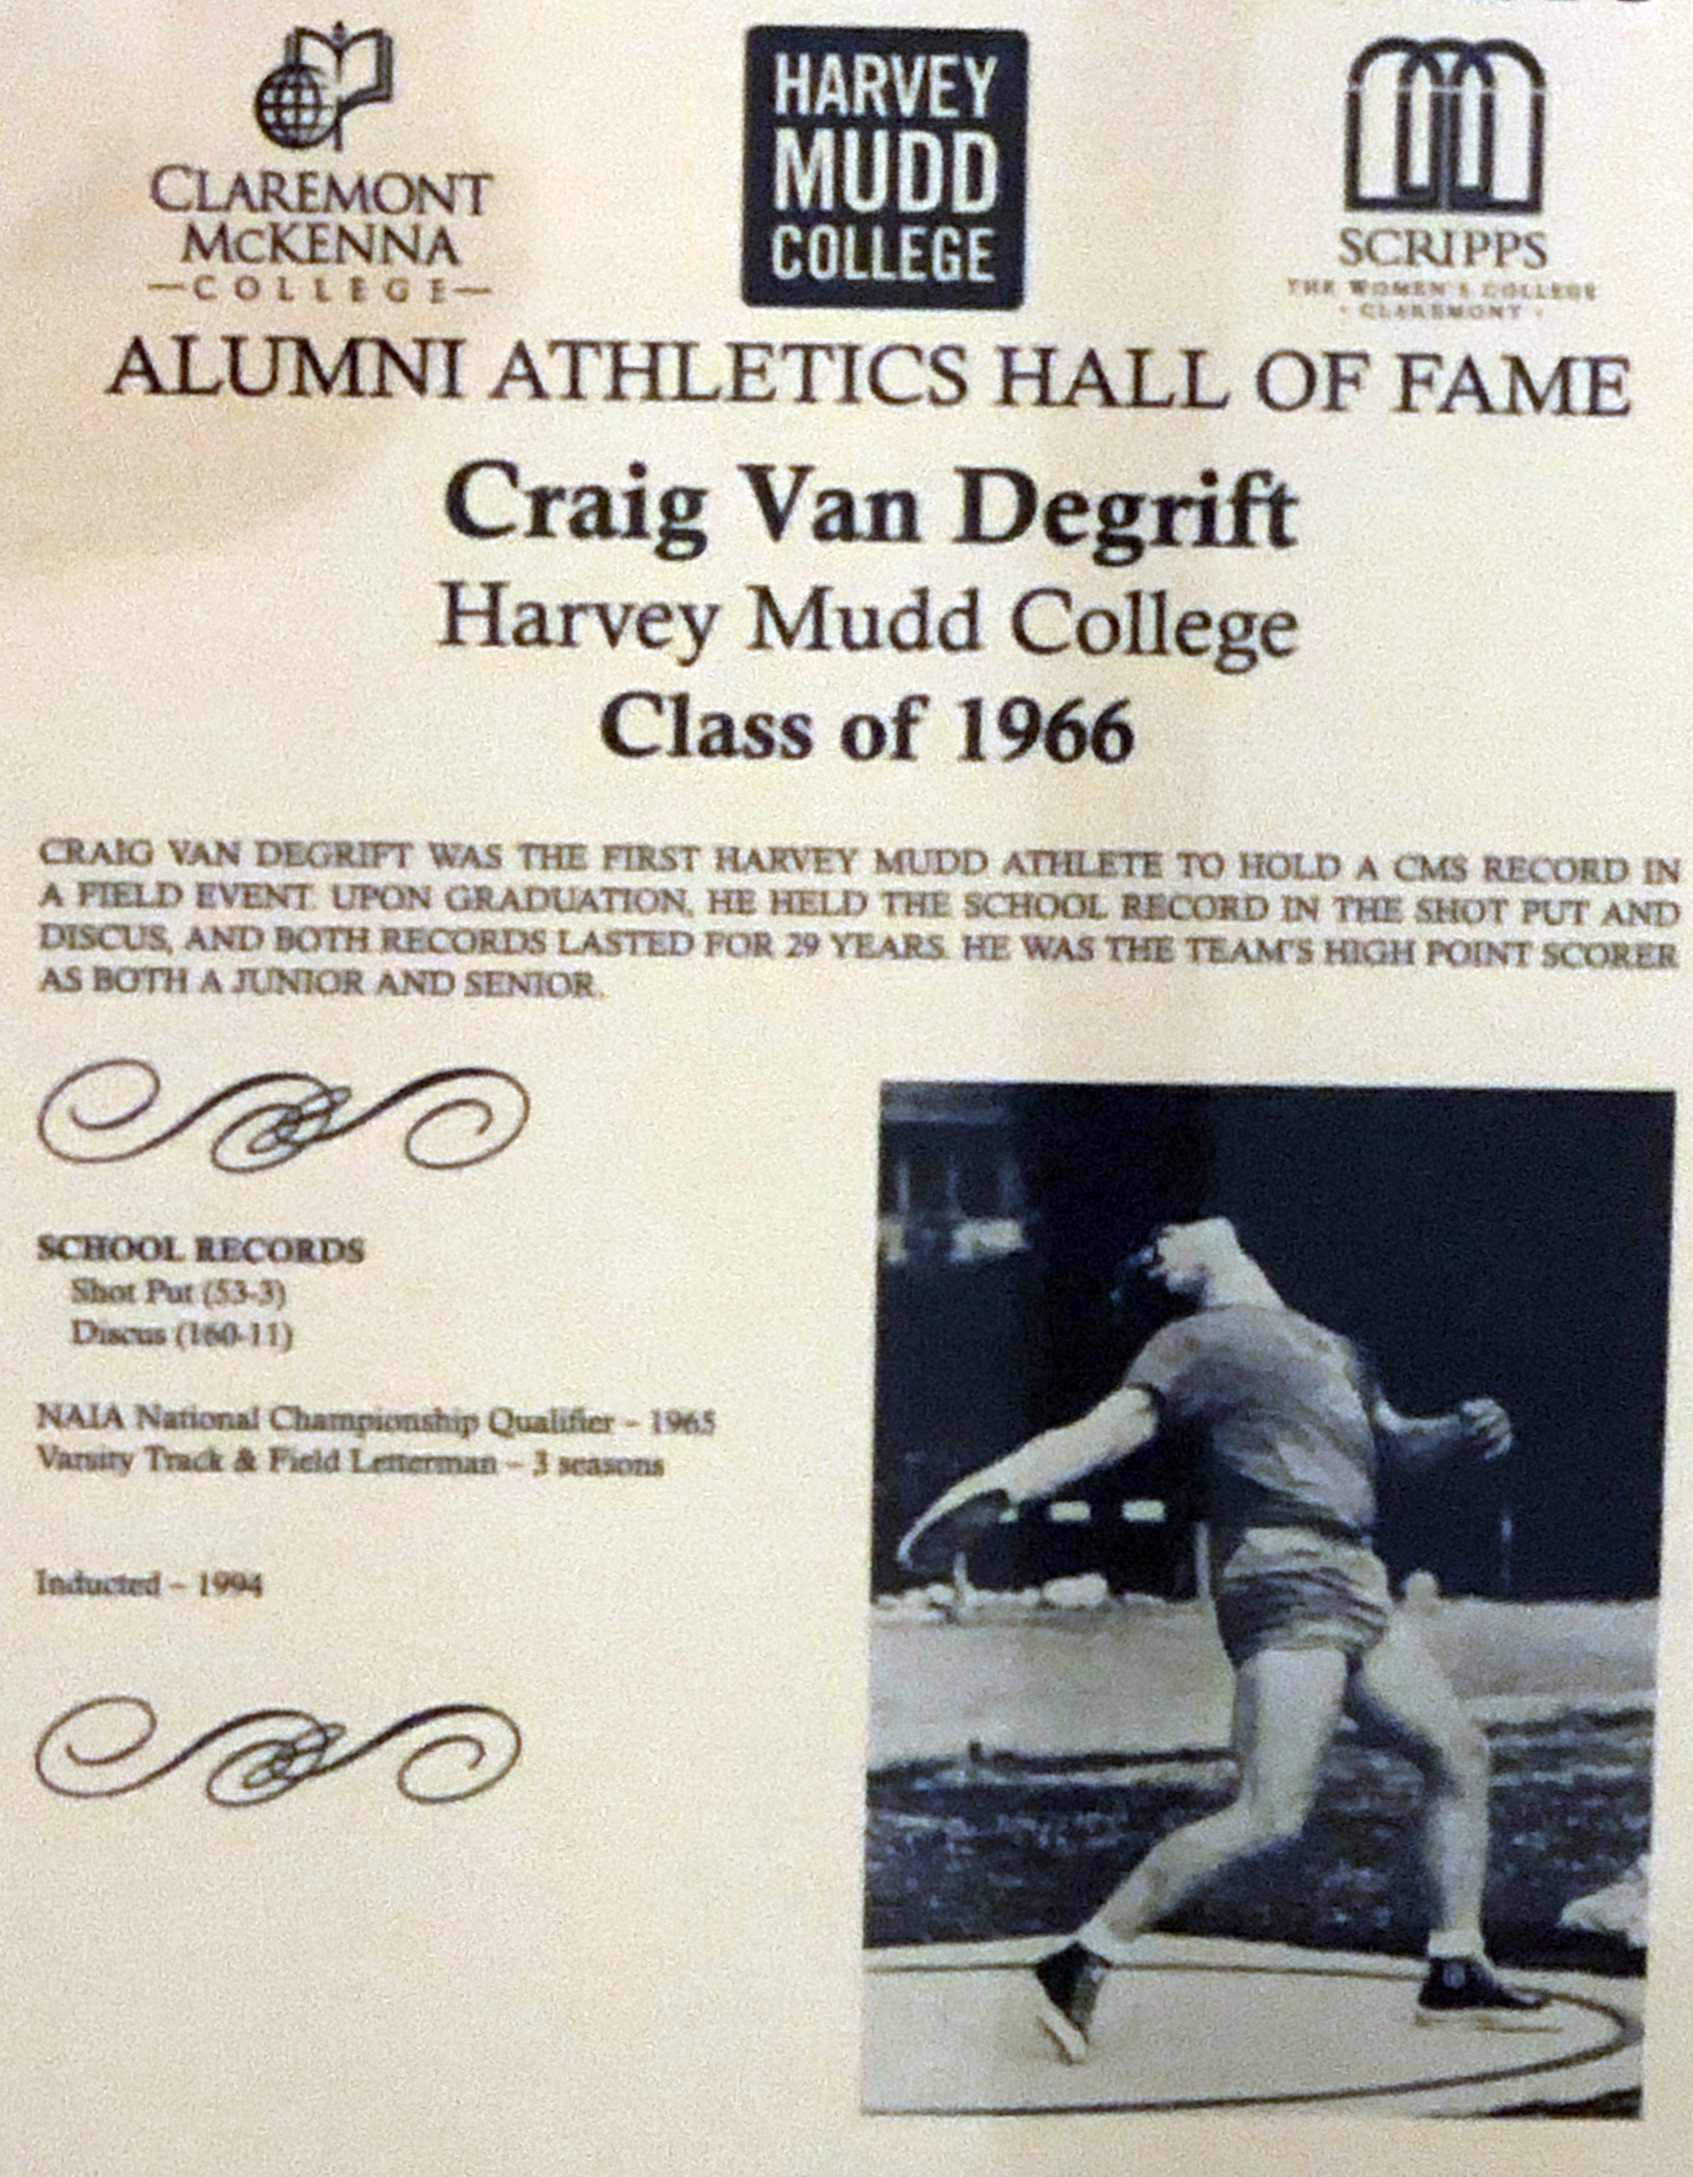 Craig Van Degrift's Hall of Fame plaque